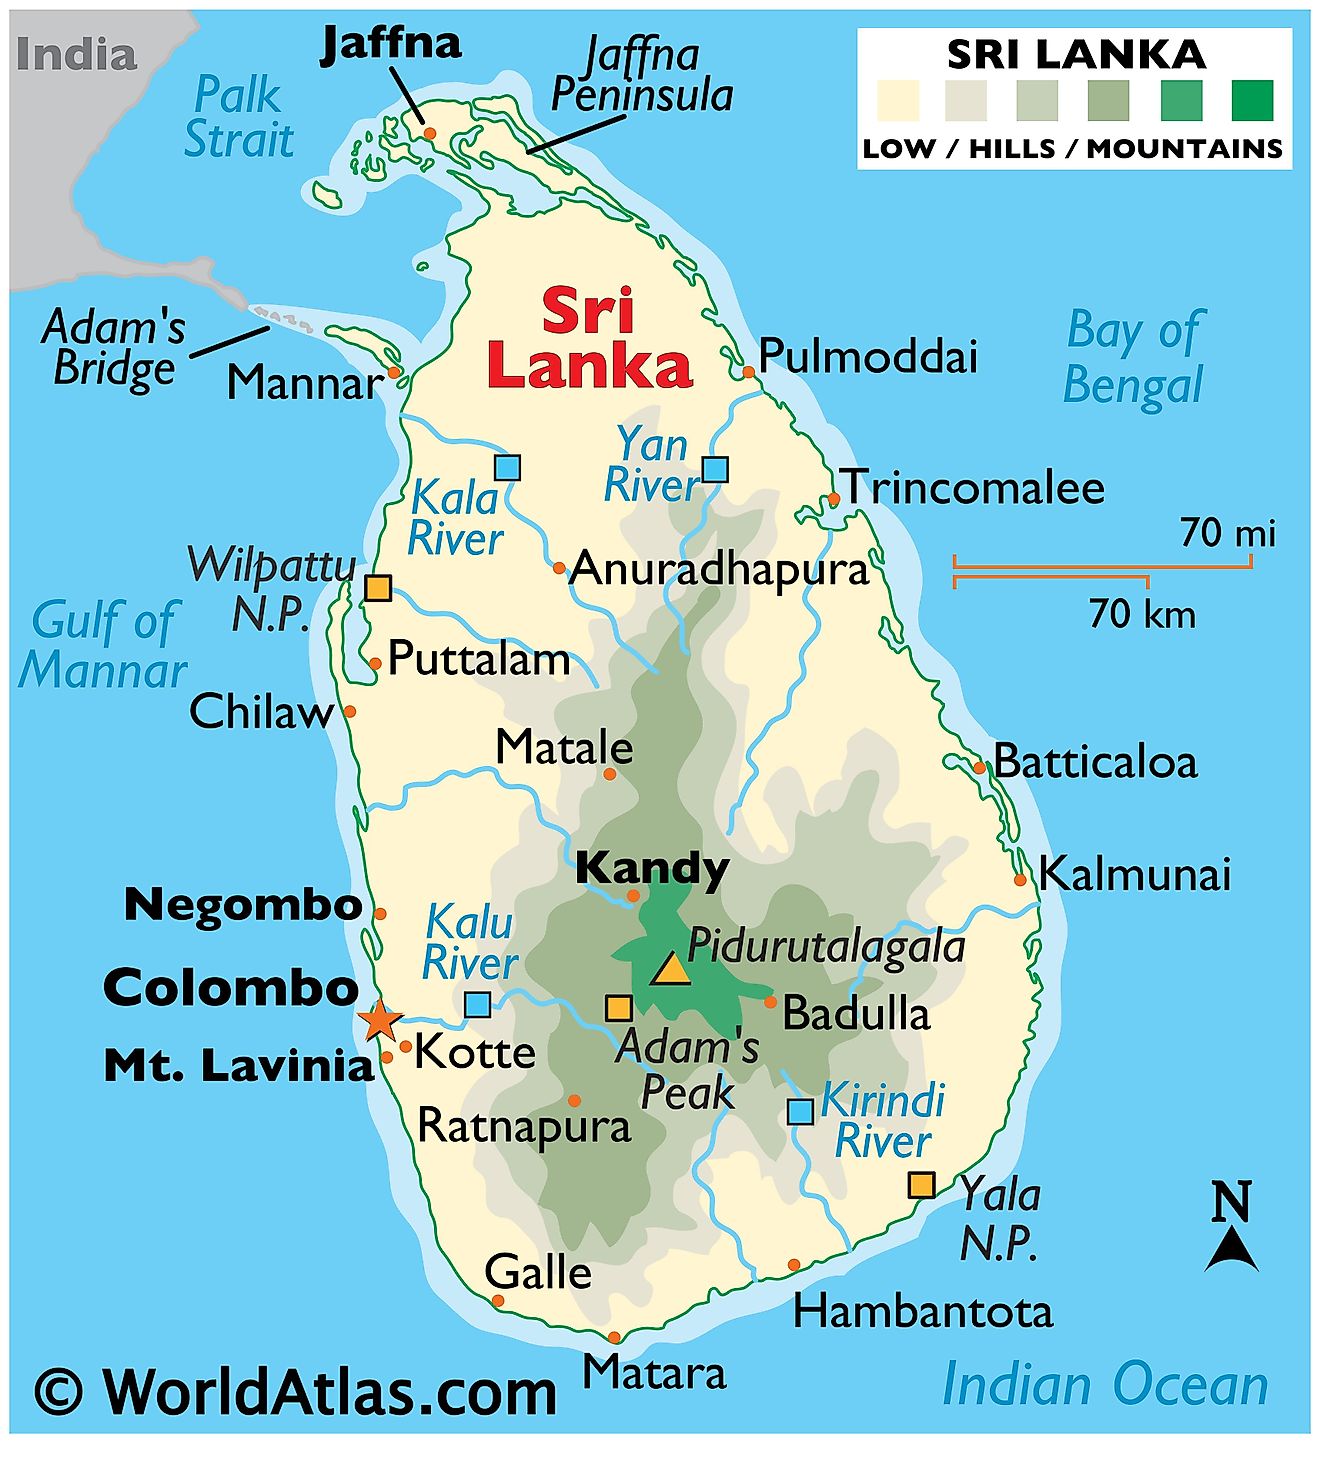 Sri Lanka Main Rivers Map Sri Lanka Maps & Facts - World Atlas